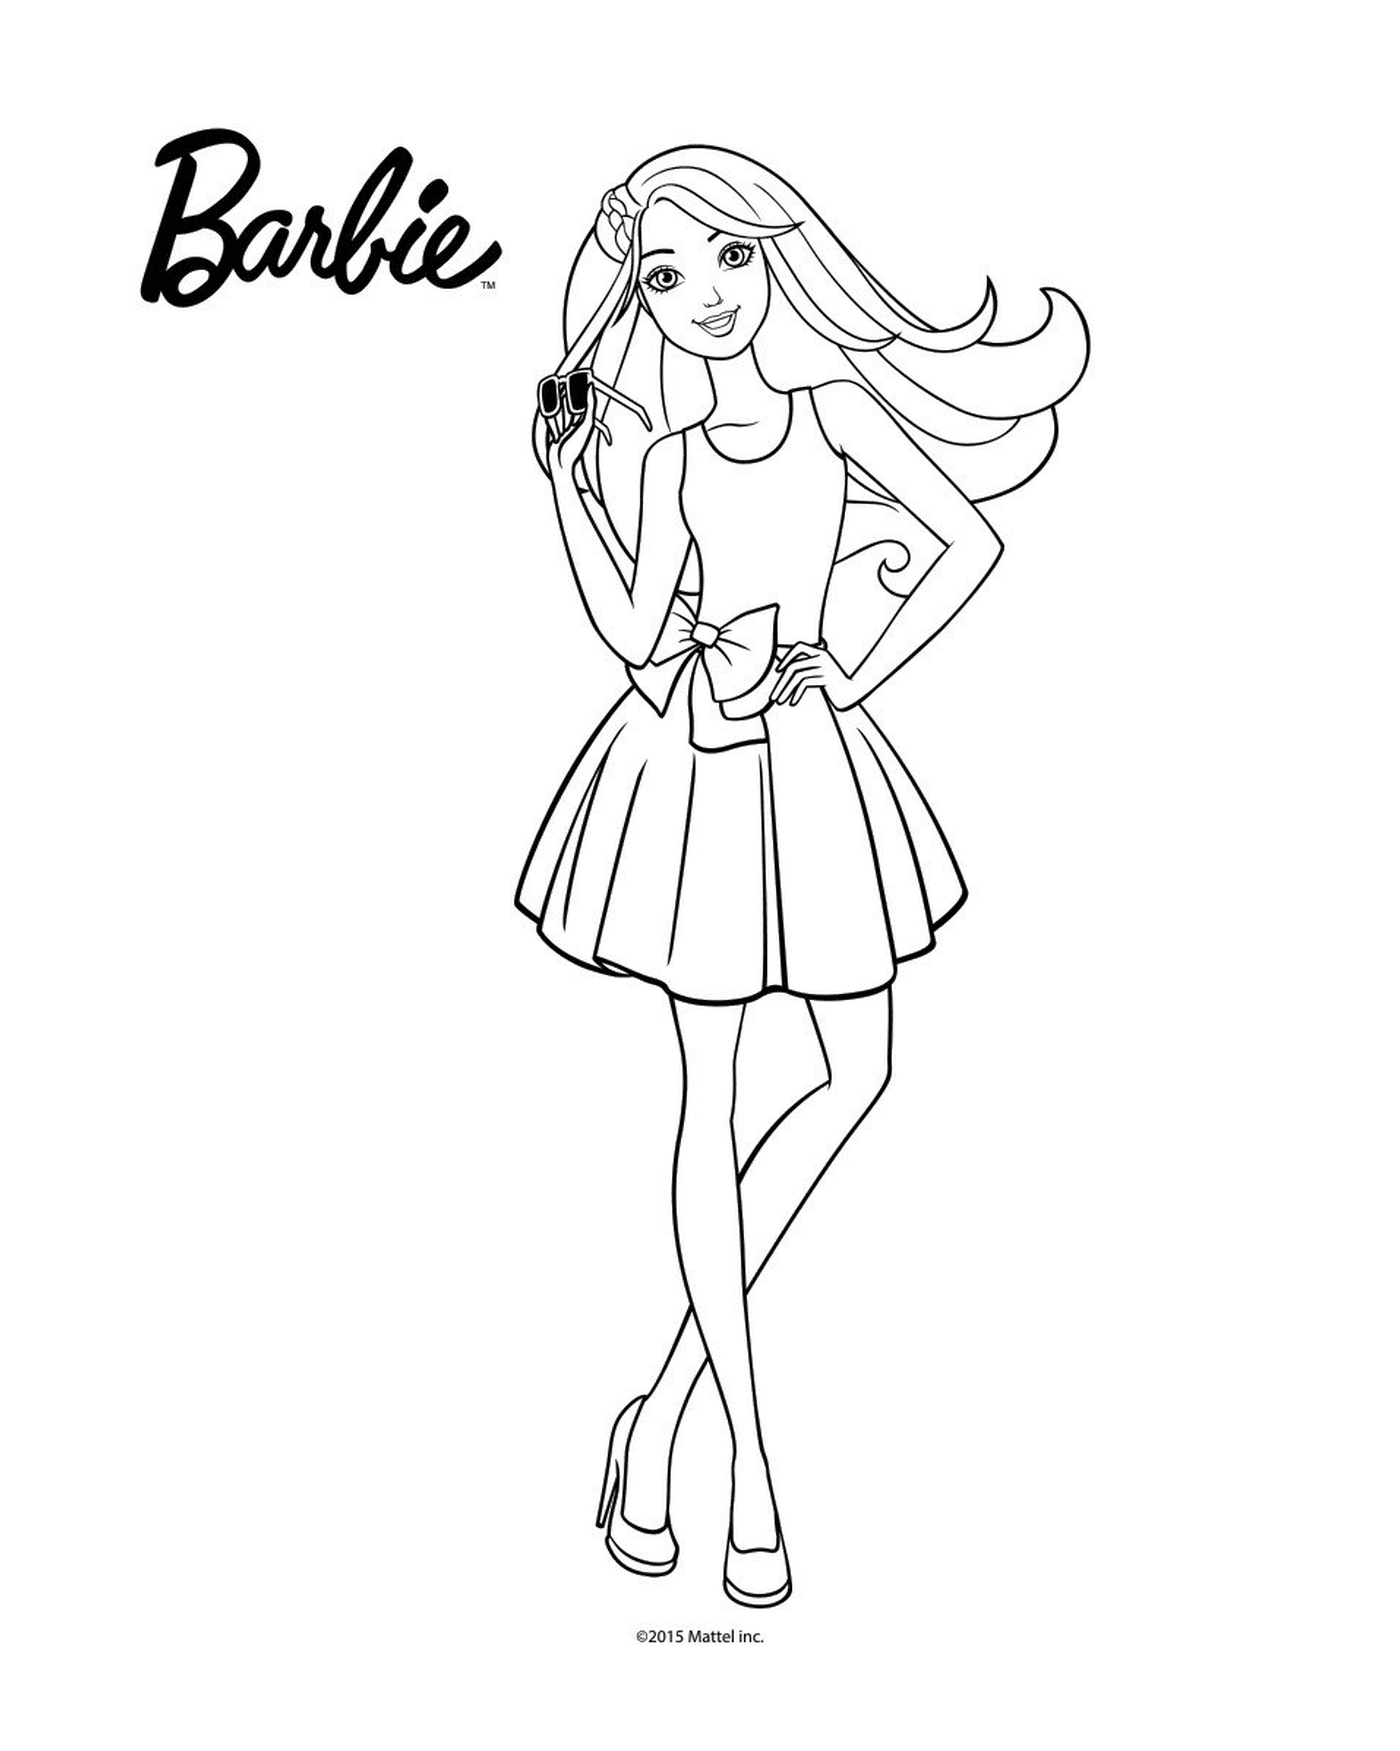  Barbie in a ribbon dress 